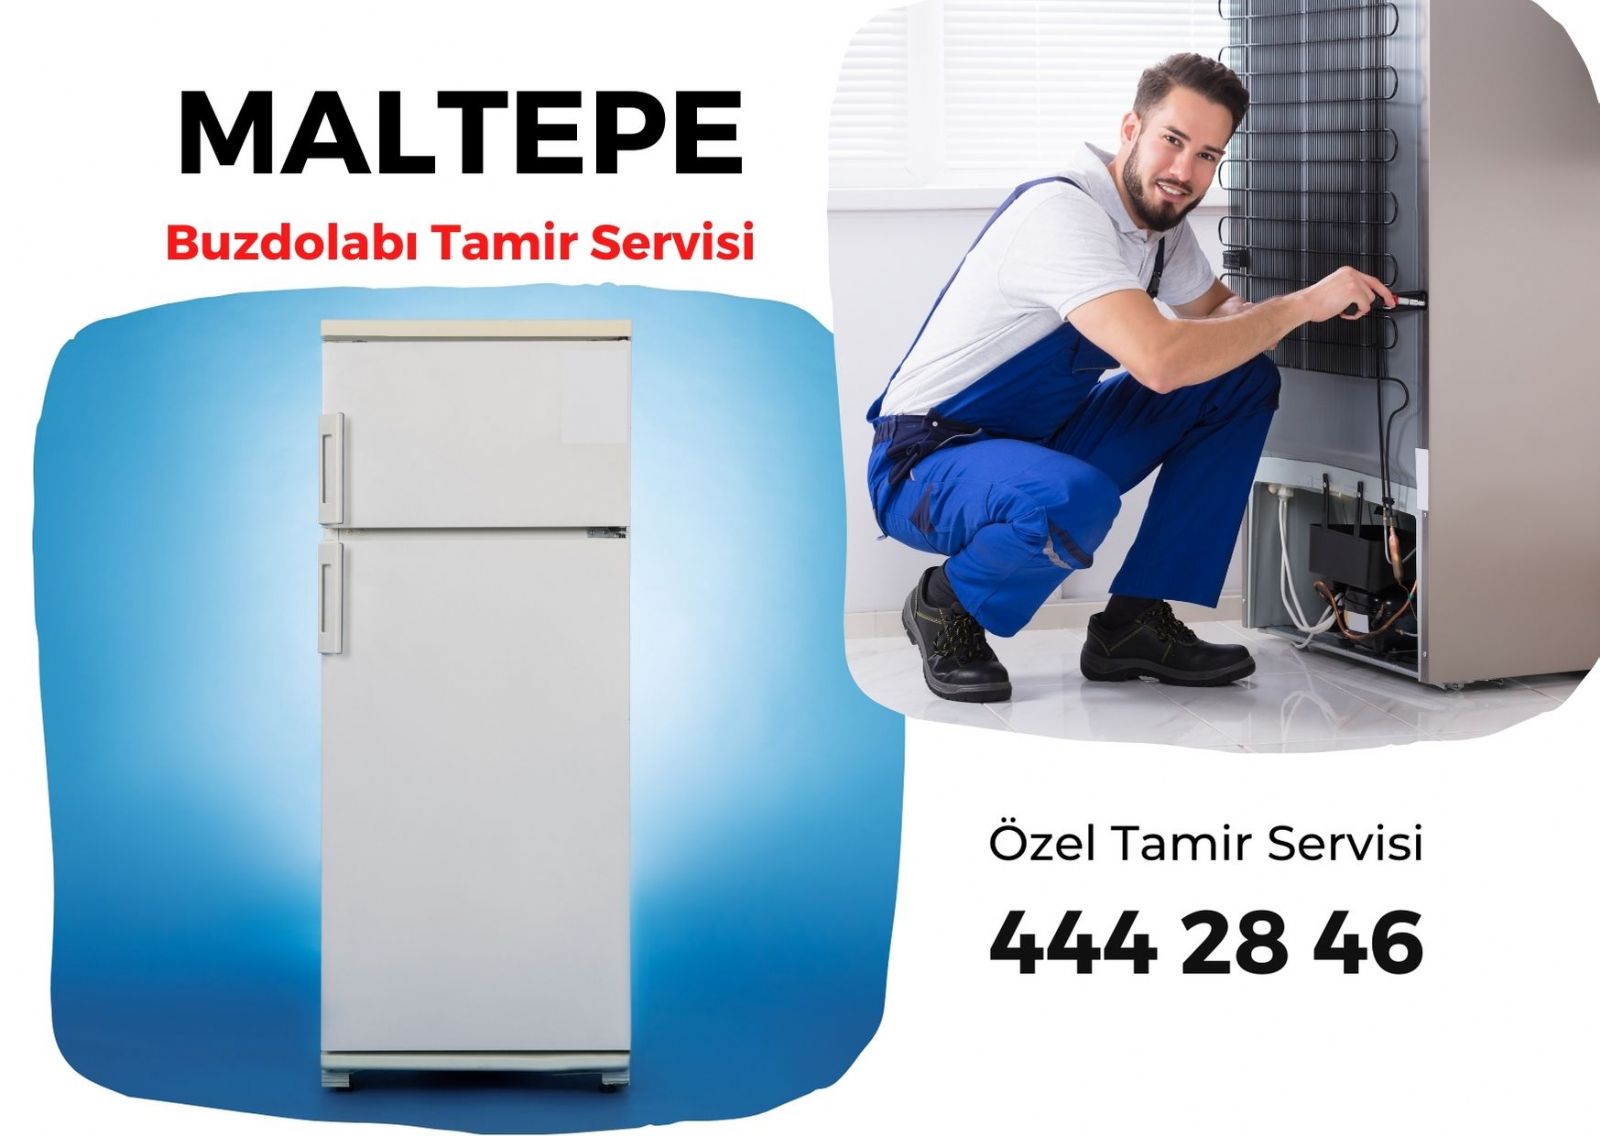 Maltepe Buzdolabı Tamircisi